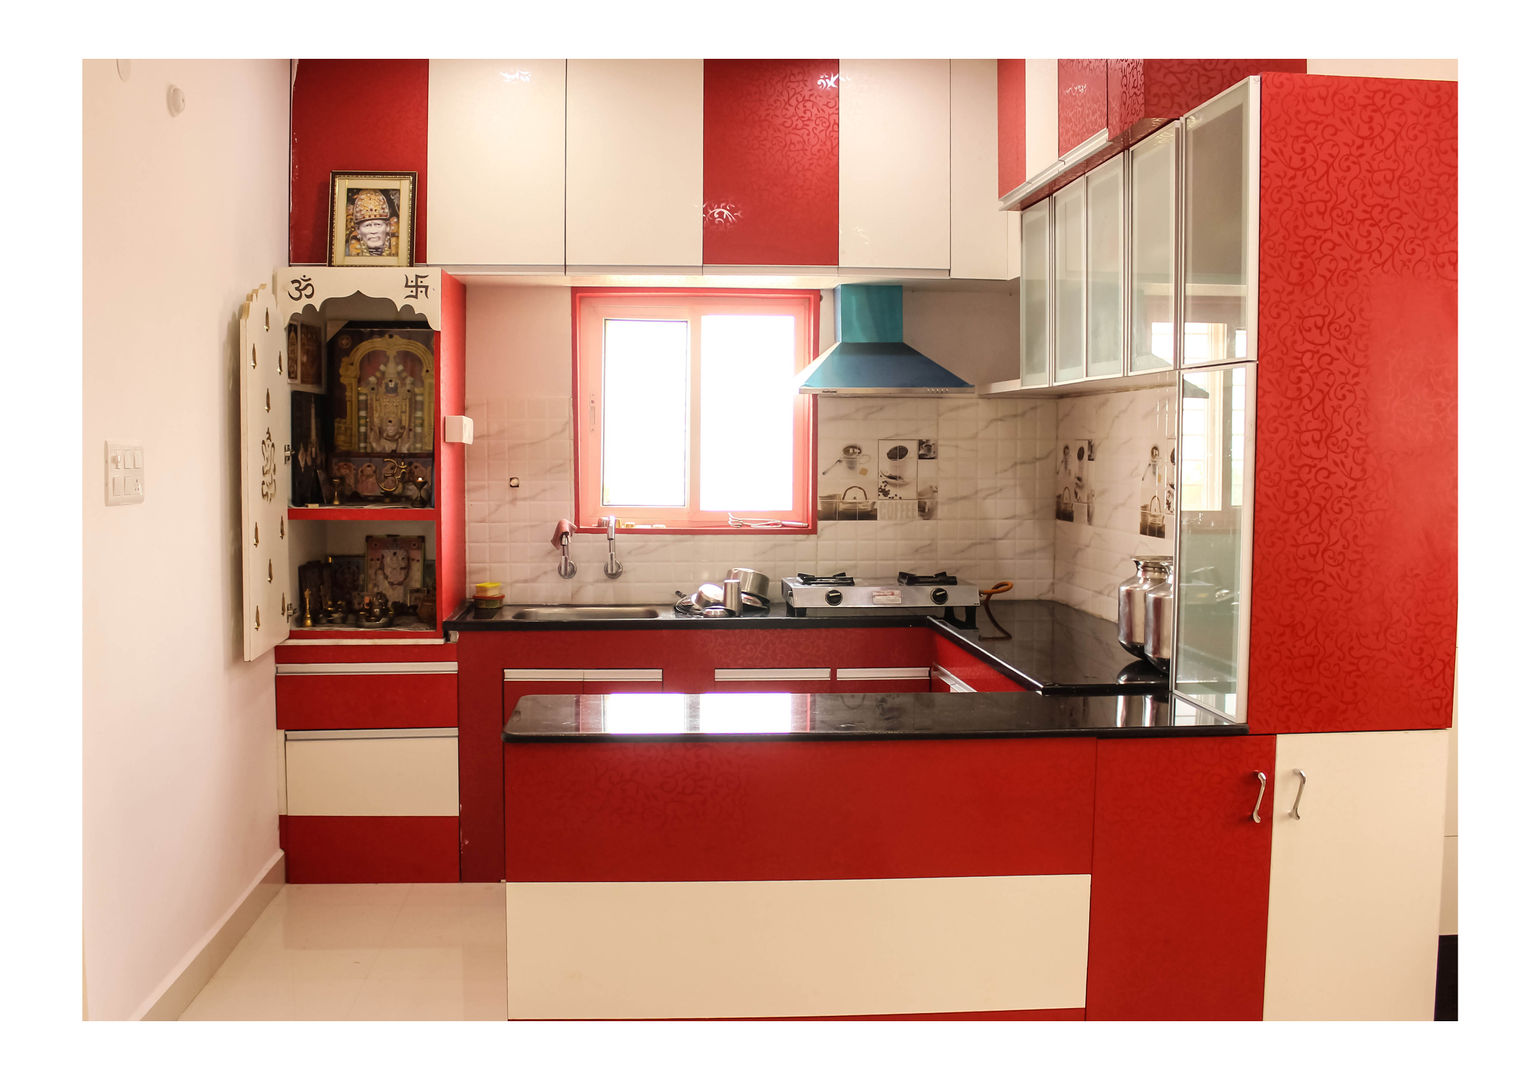 2 Bedroom Flat at Manikonda, Happy Homes Designers Happy Homes Designers Modern kitchen Cabinets & shelves